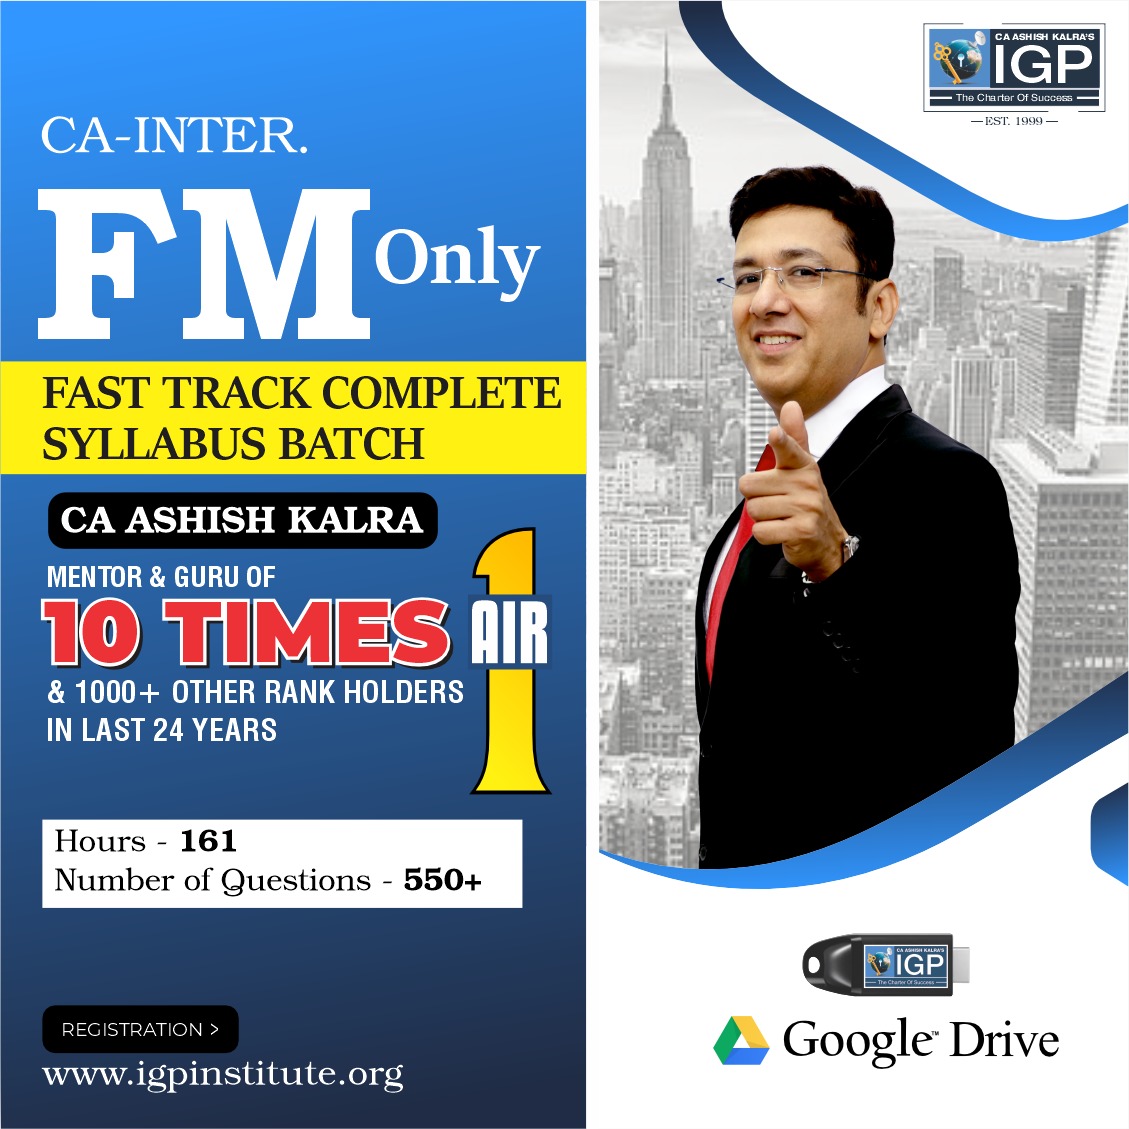 CA -INTER- Financial Management  (FM Only)